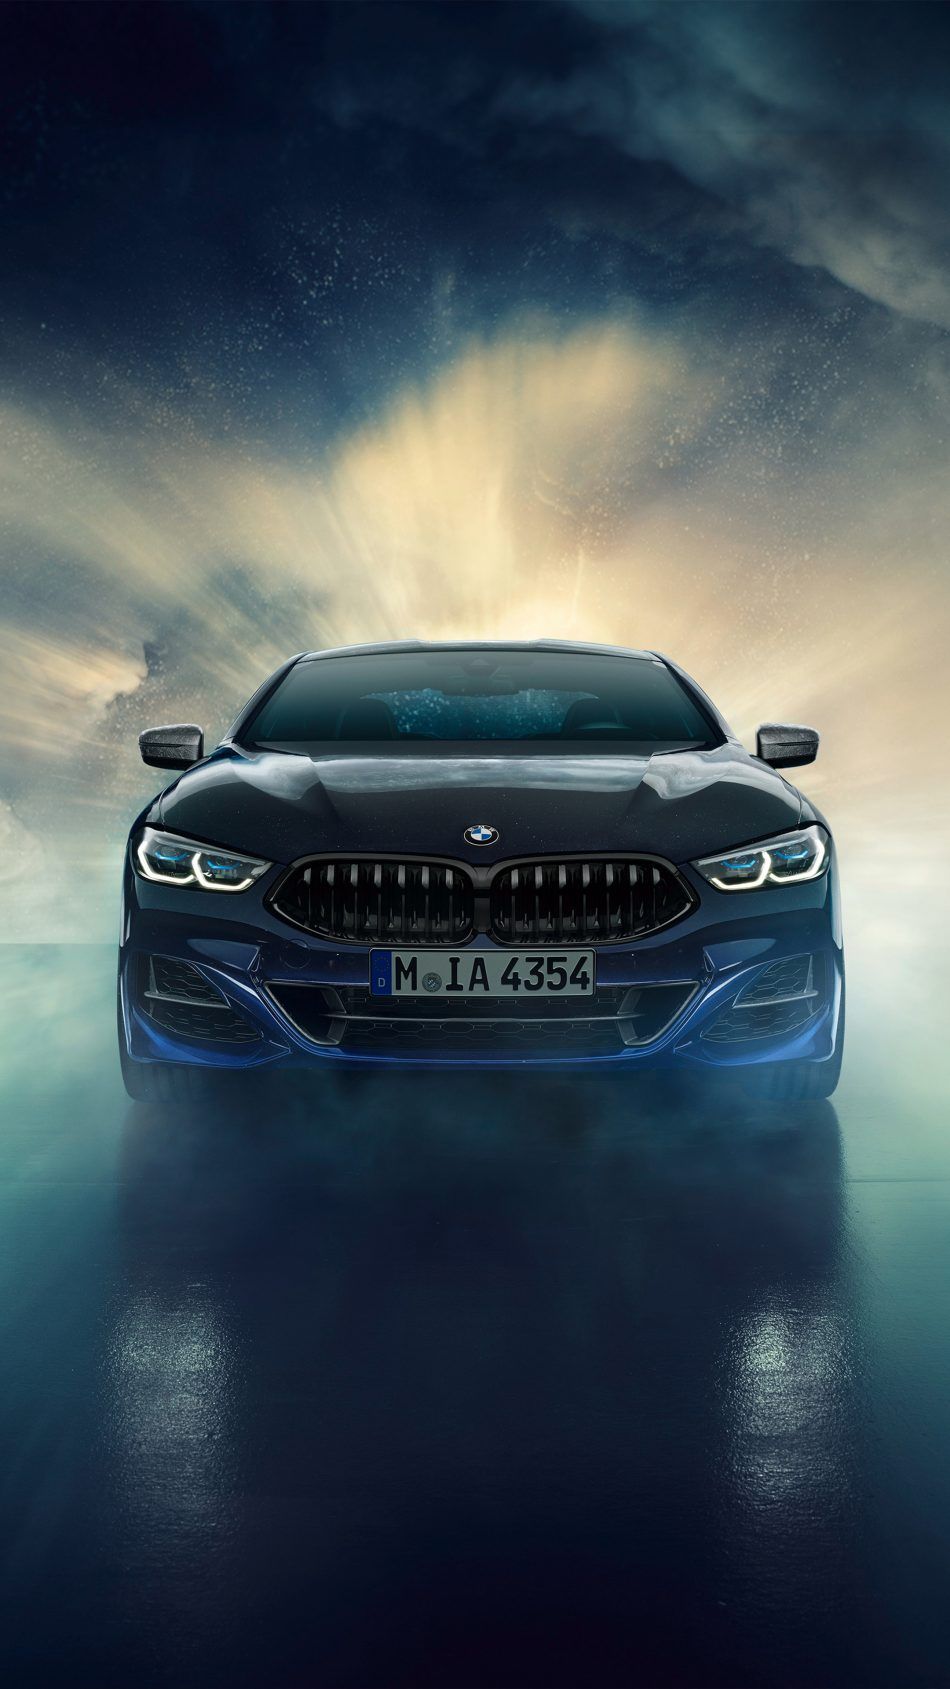 BMW Individual M850i Xdrive Night Sky 4K Ultra HD Mobile Wallpaper. Bmw, Bmw wallpaper, Super luxury cars